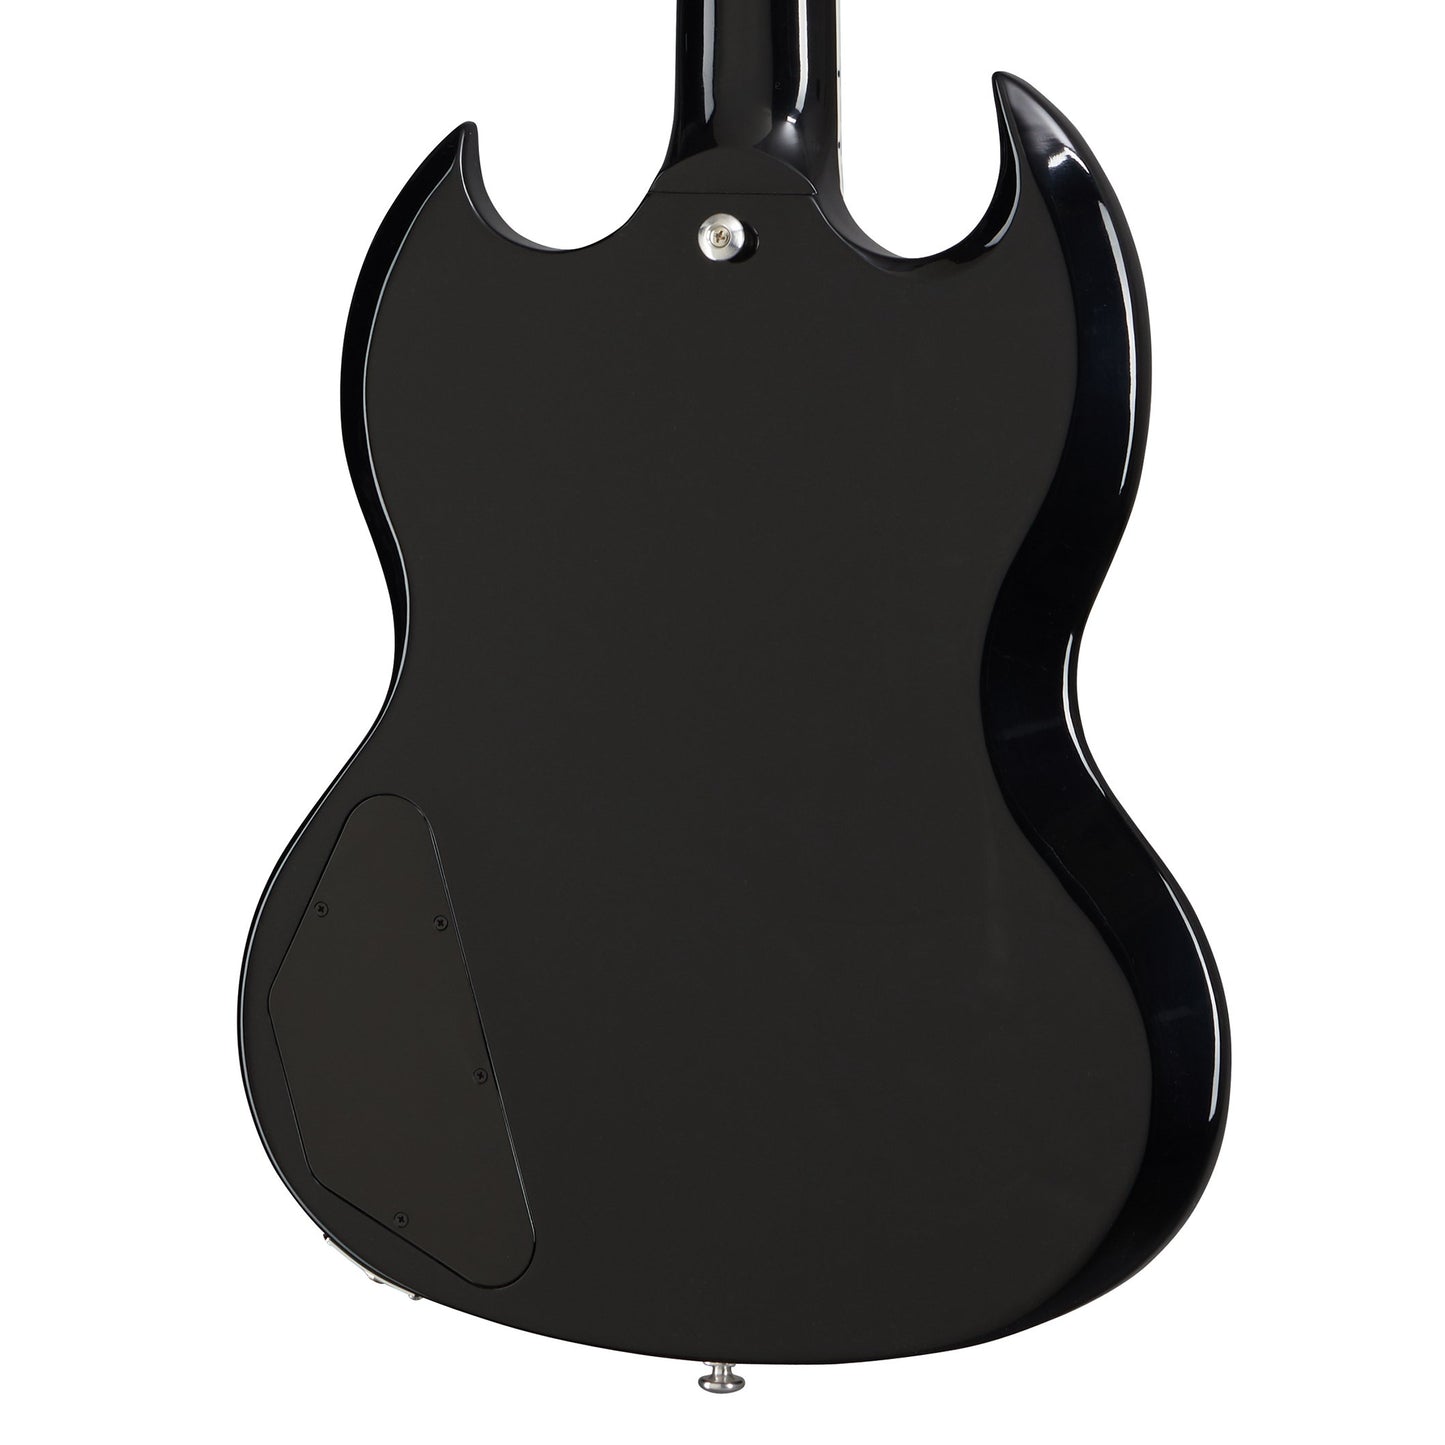 Gibson SG Modern Electric Guitar, Transparent Black Fade